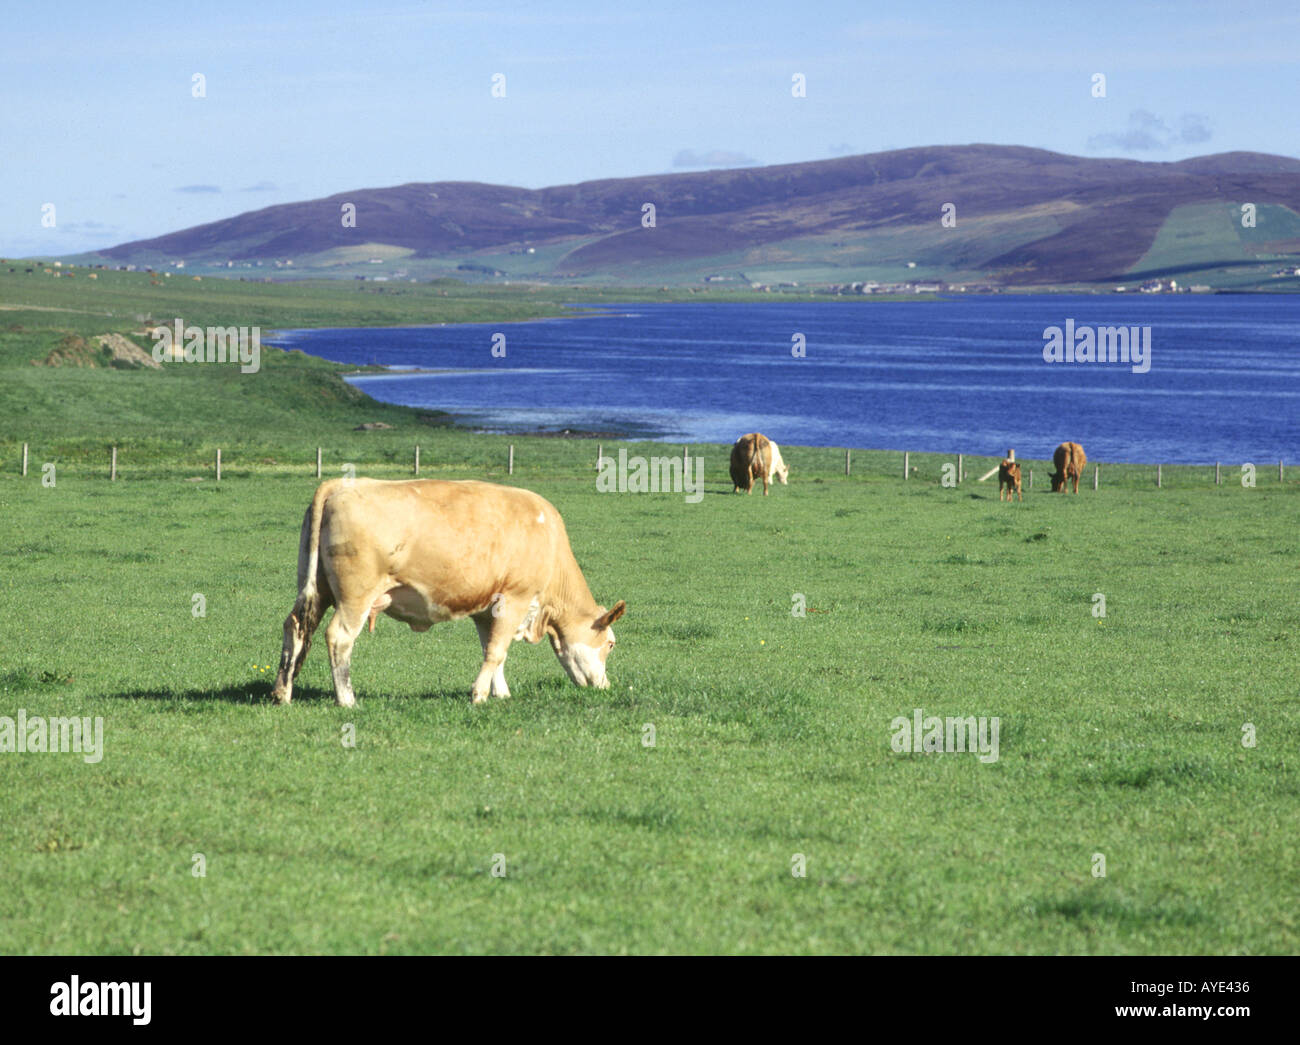 dh Cow FARMING UK in field by loch of stenness Farming boef stock bovins vaches pâturage nourrissant des animaux agricoles britanniques d'écosse Banque D'Images